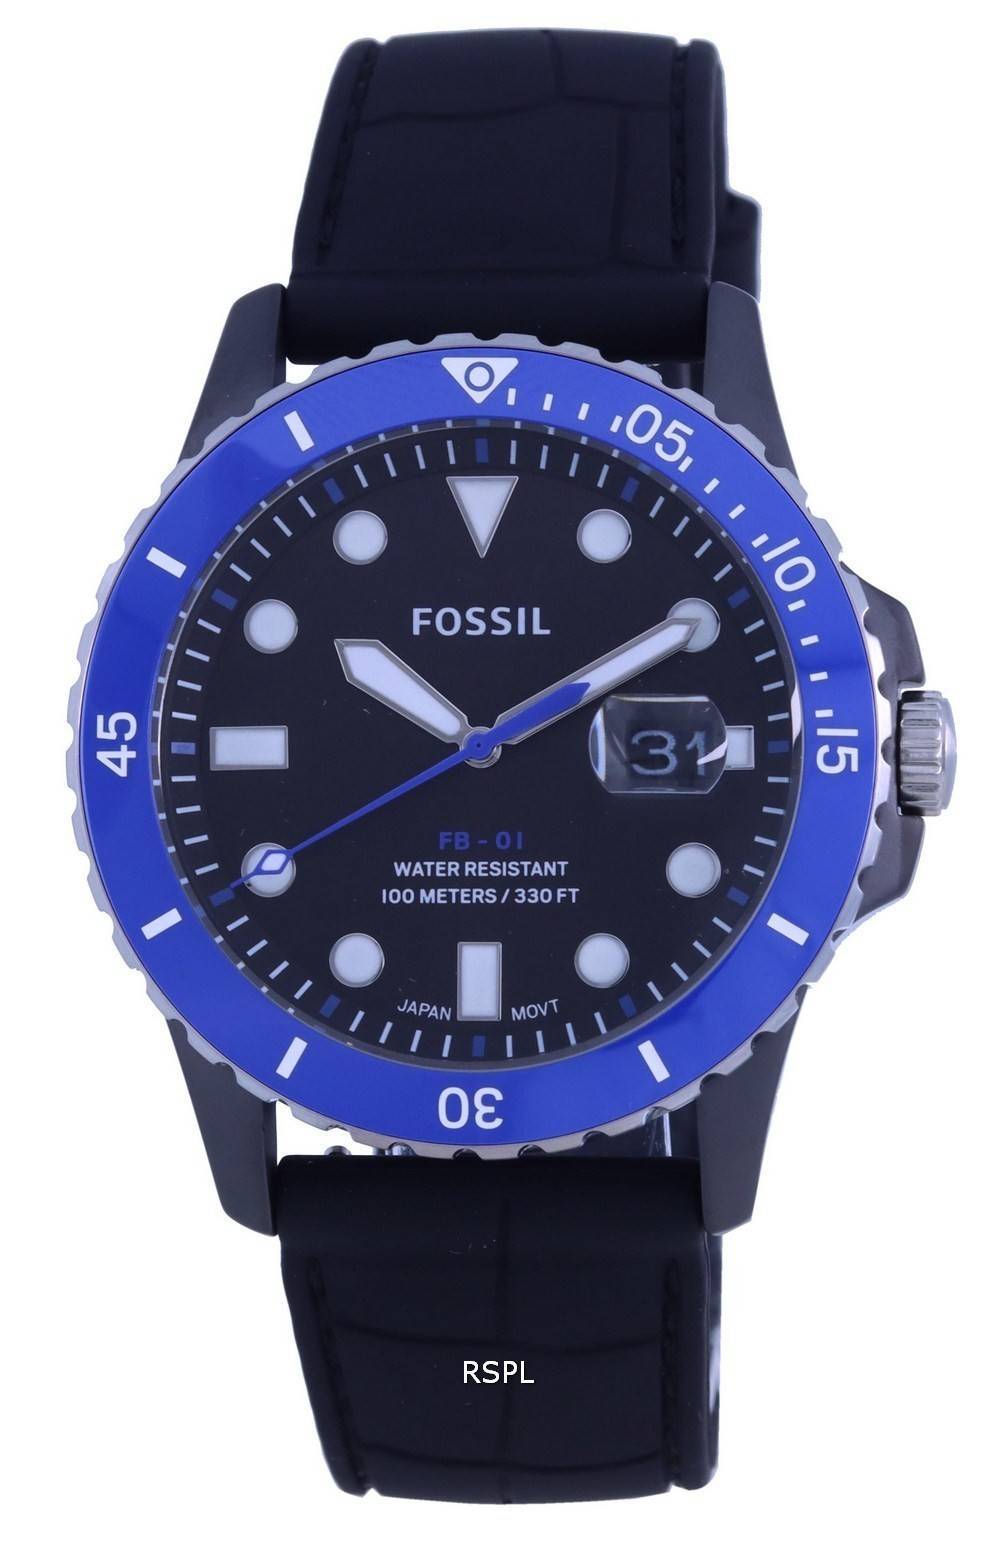 Fossil JFB-01 Black Dial Silicon Strap Quartz CE5023 100M Mens Watch